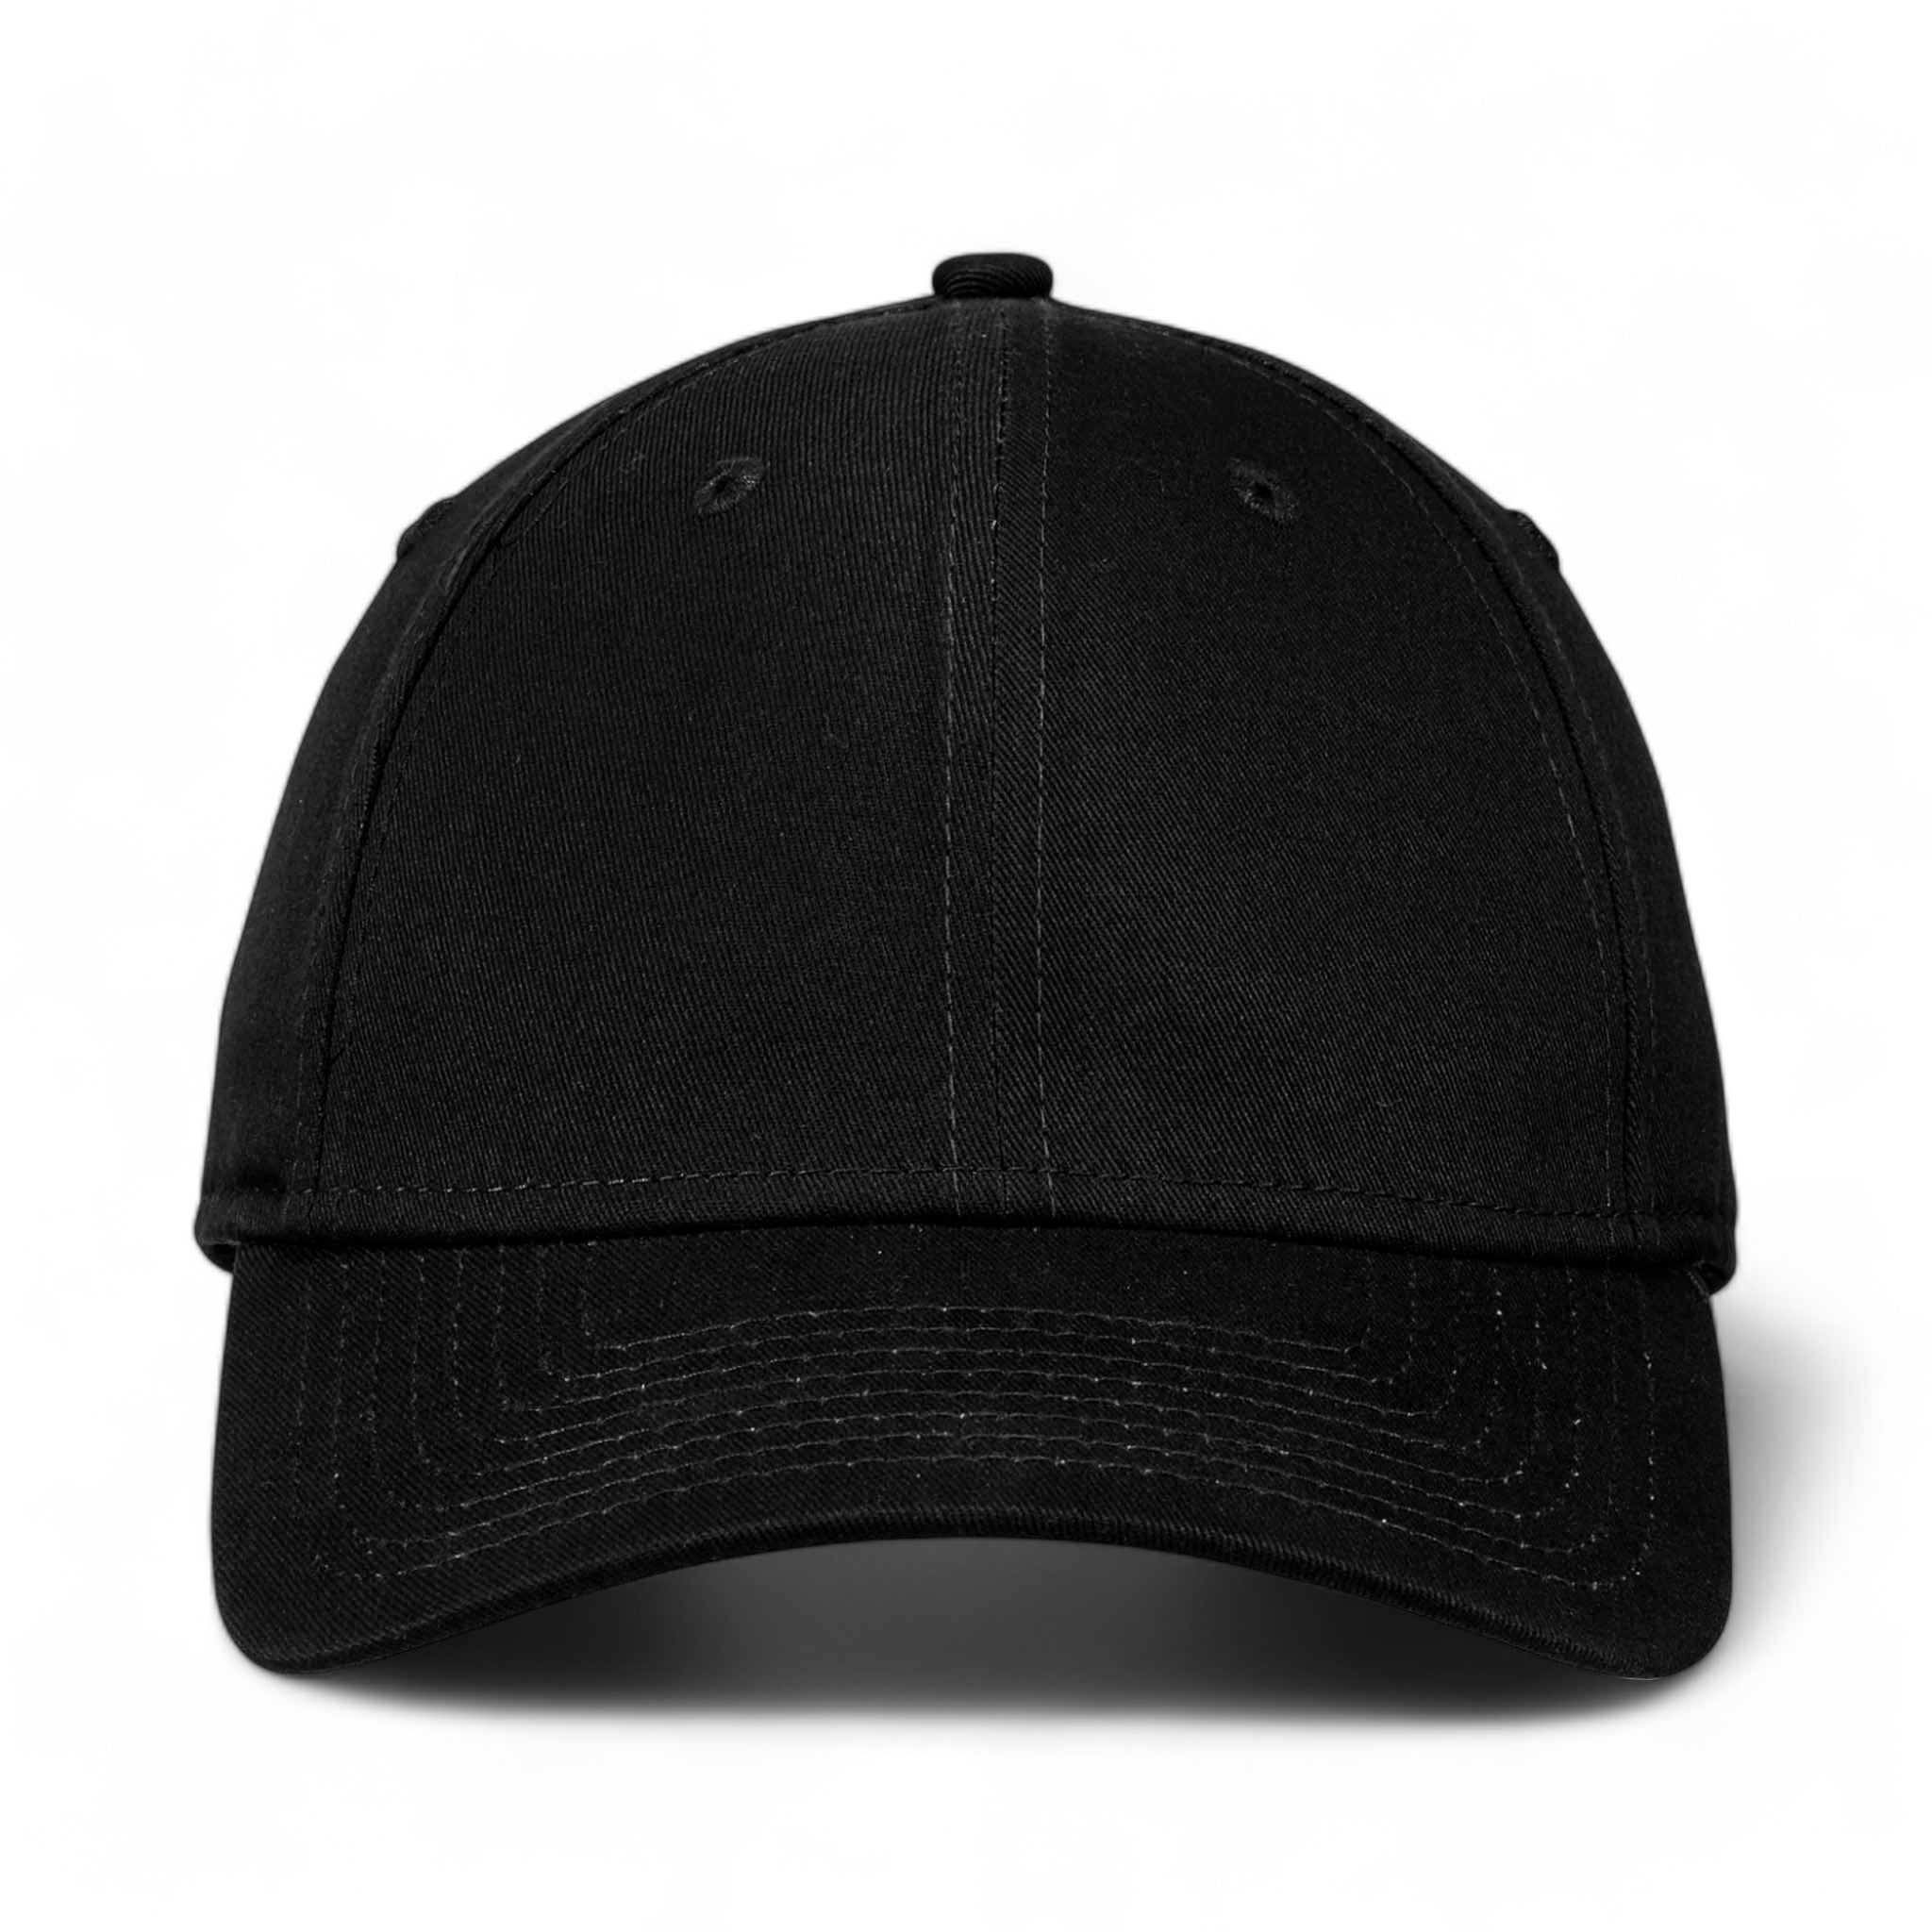 Front view of New Era NE200 custom hat in black